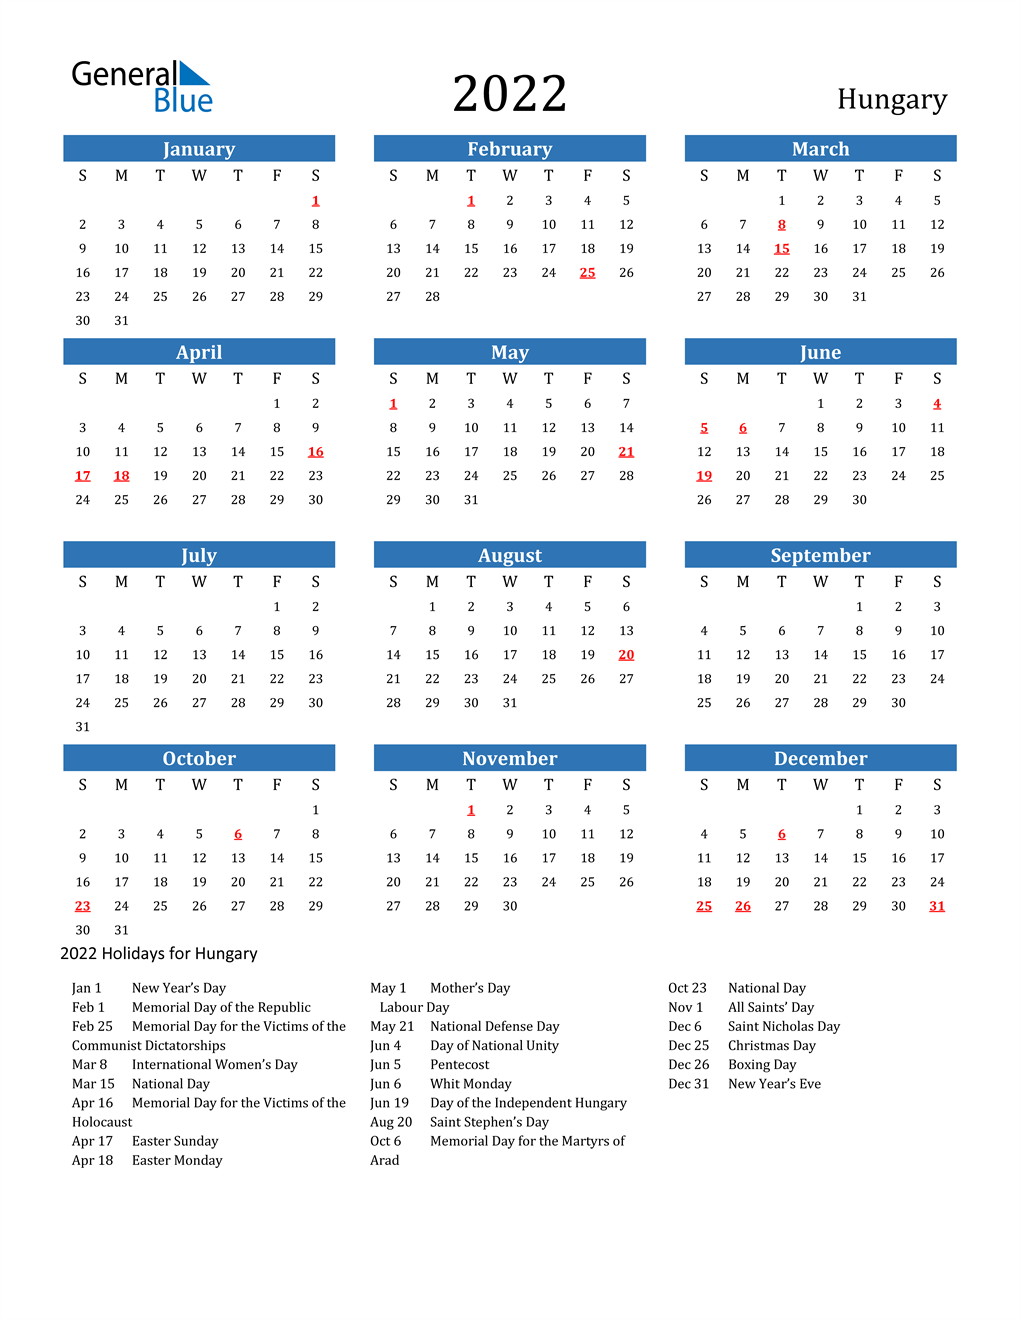 Hungary 2022 Calendar with Holidays